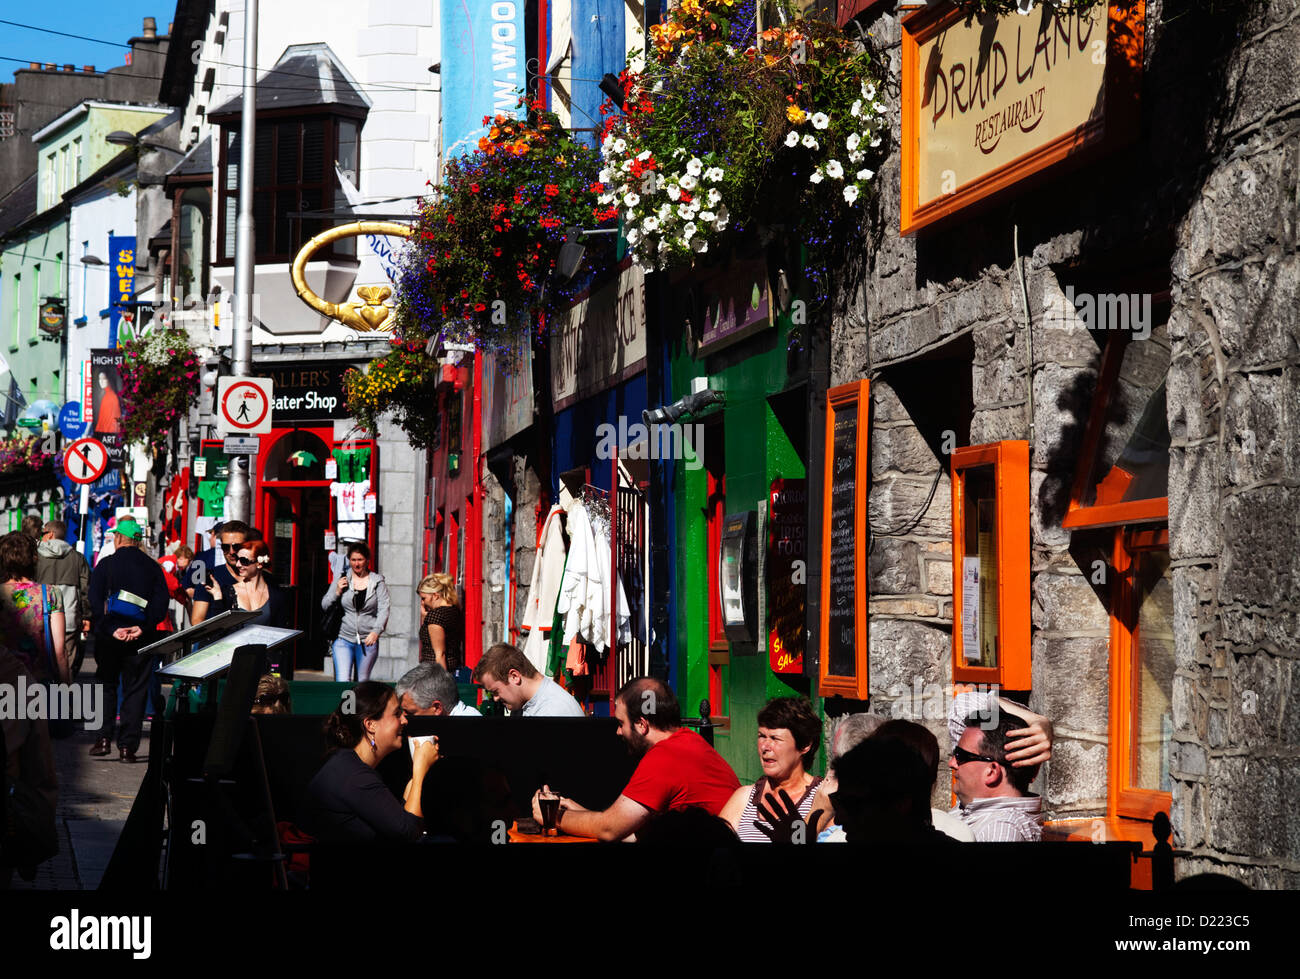 Outdoor Cafe/Restaurant, Street Scene in William Street, Galway City, Ireland Stock Photo